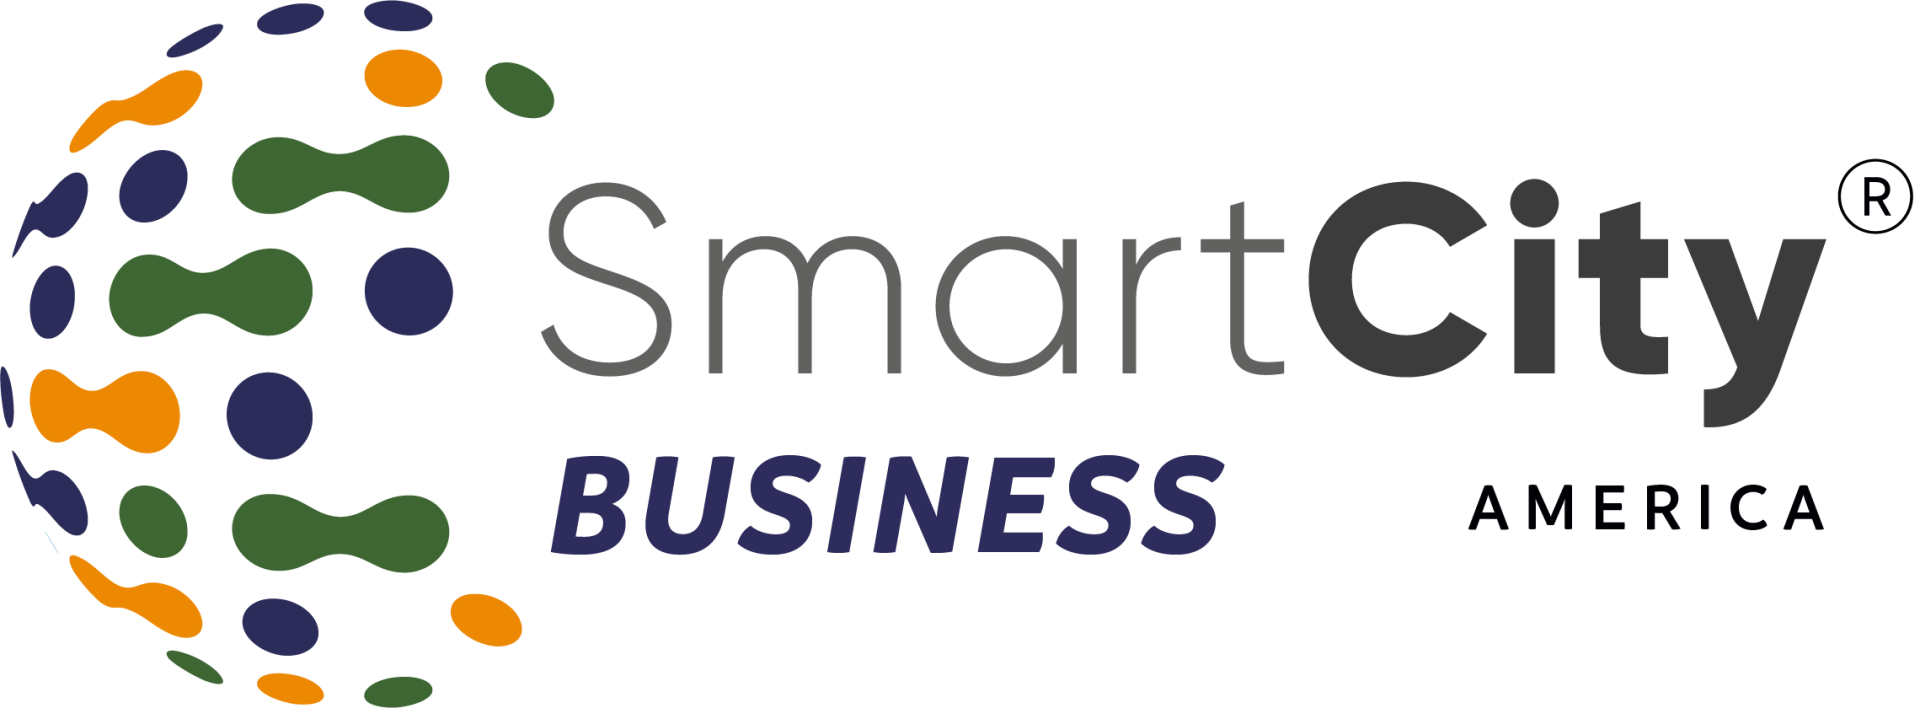 Logomarca do Instituto Smart City Business America